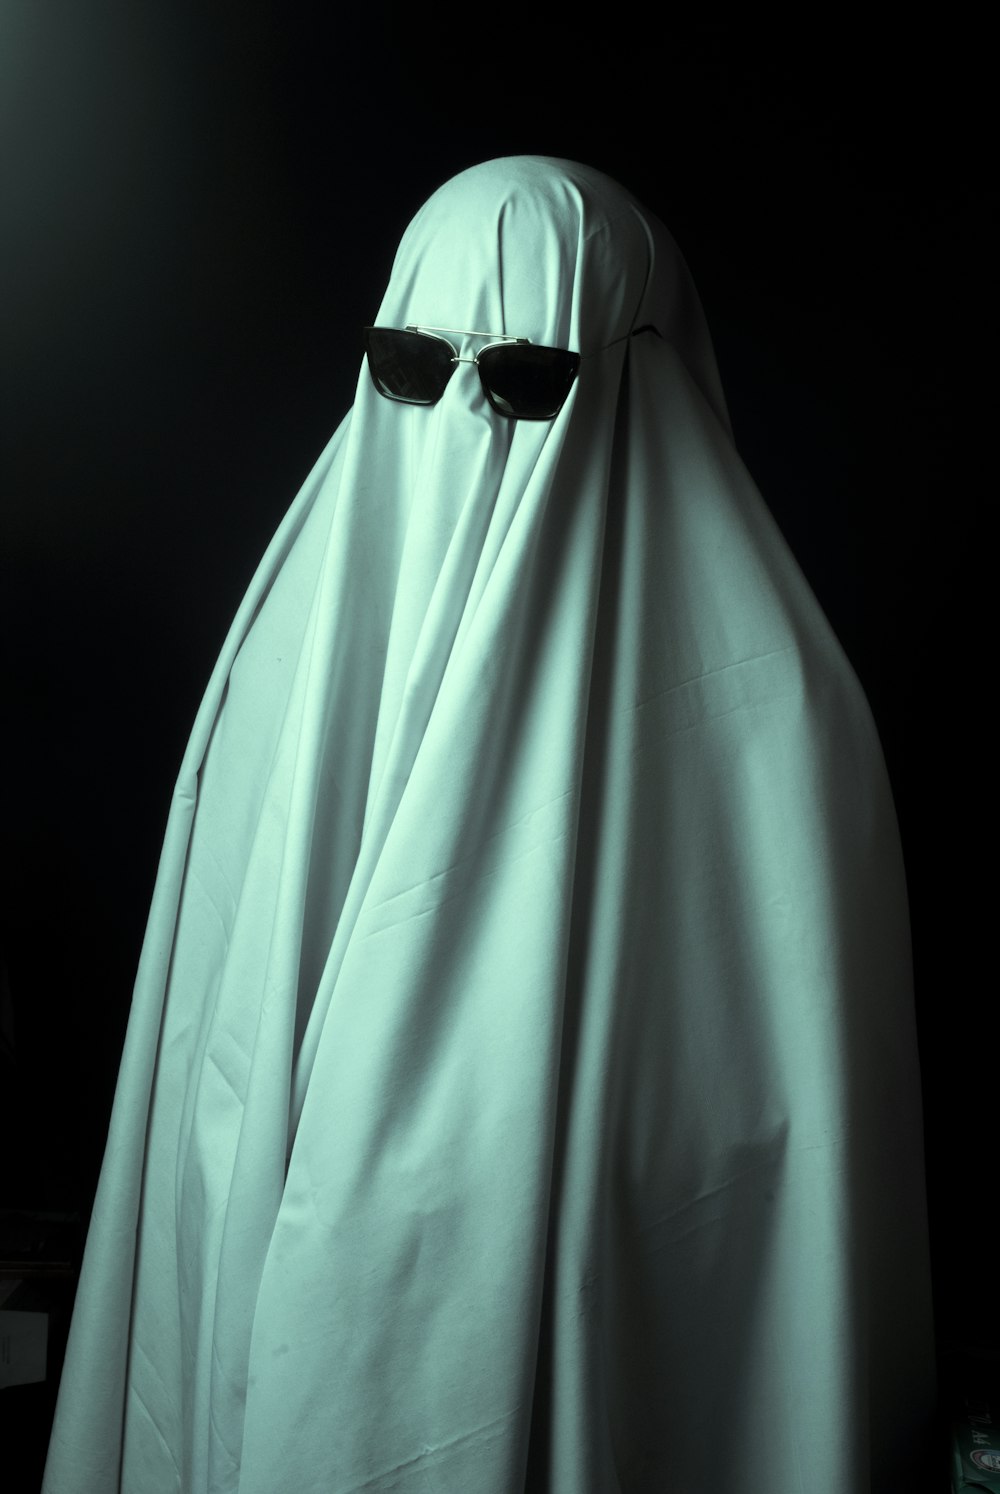 a person in a white cloak and sunglasses